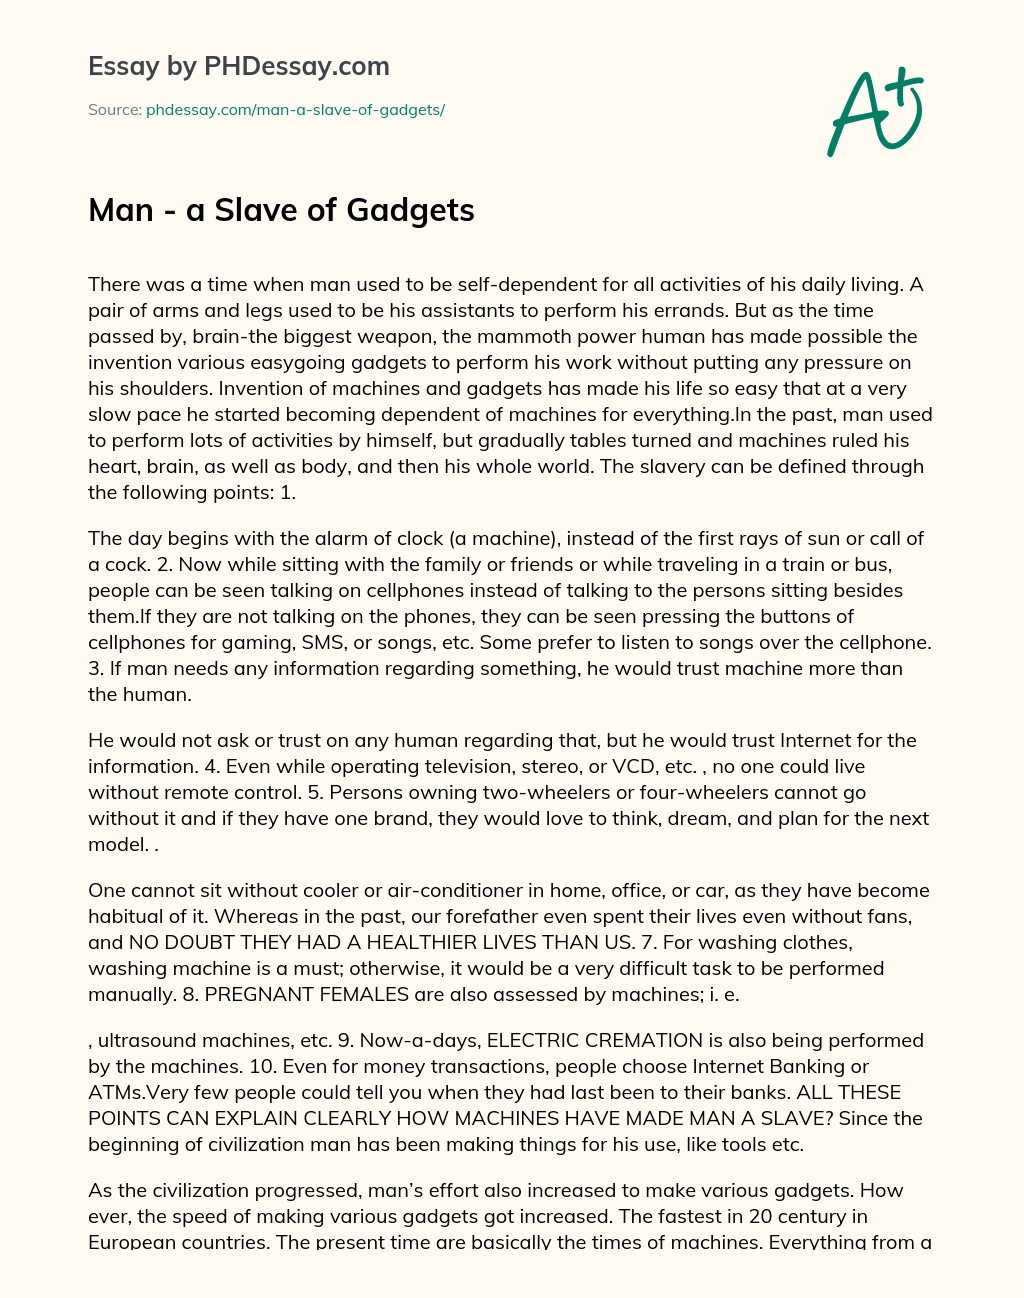 Man – a Slave of Gadgets essay